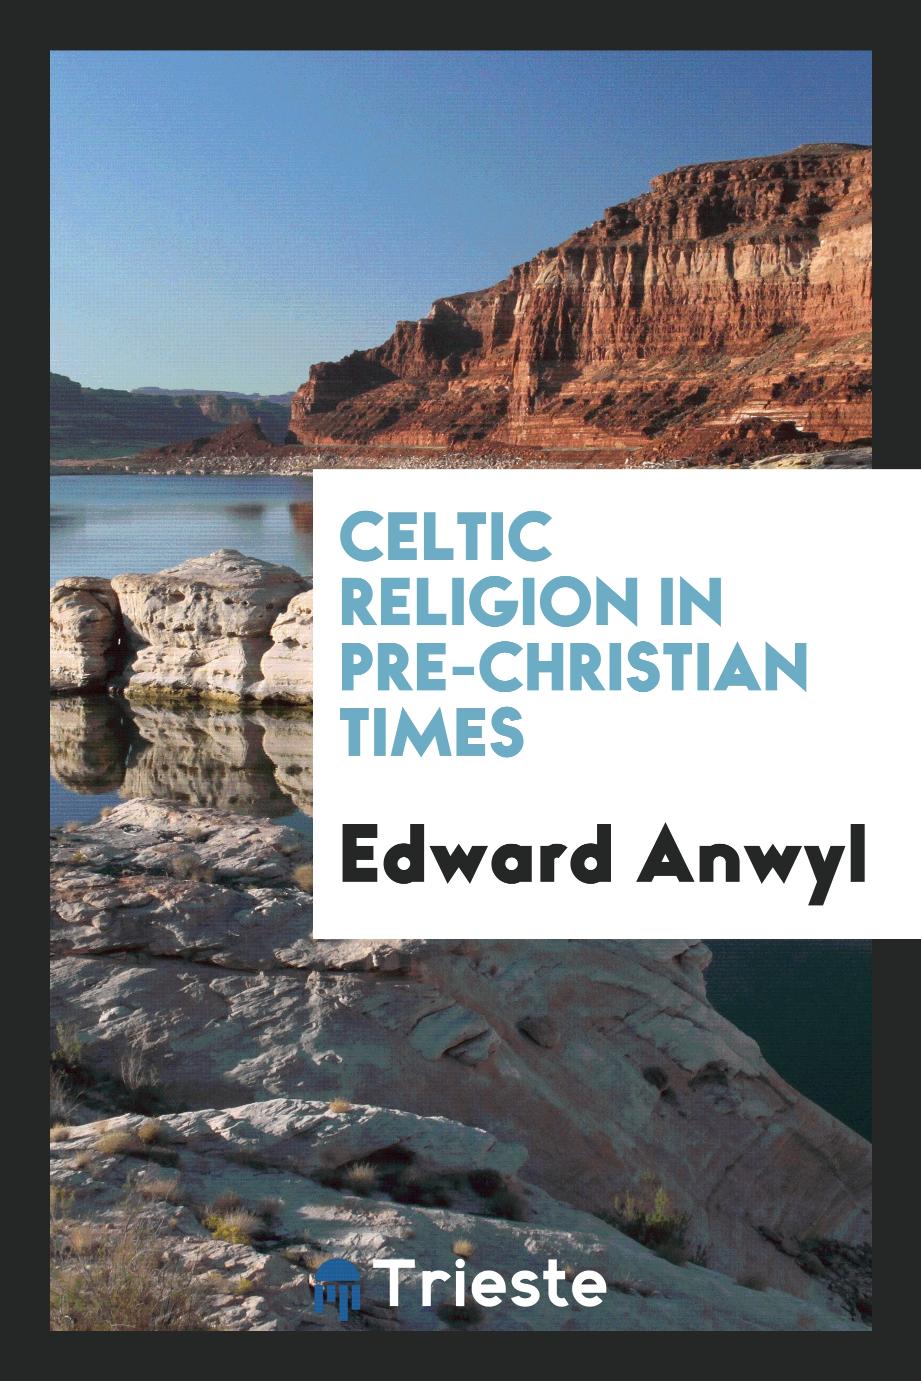 Celtic religion in pre-Christian times